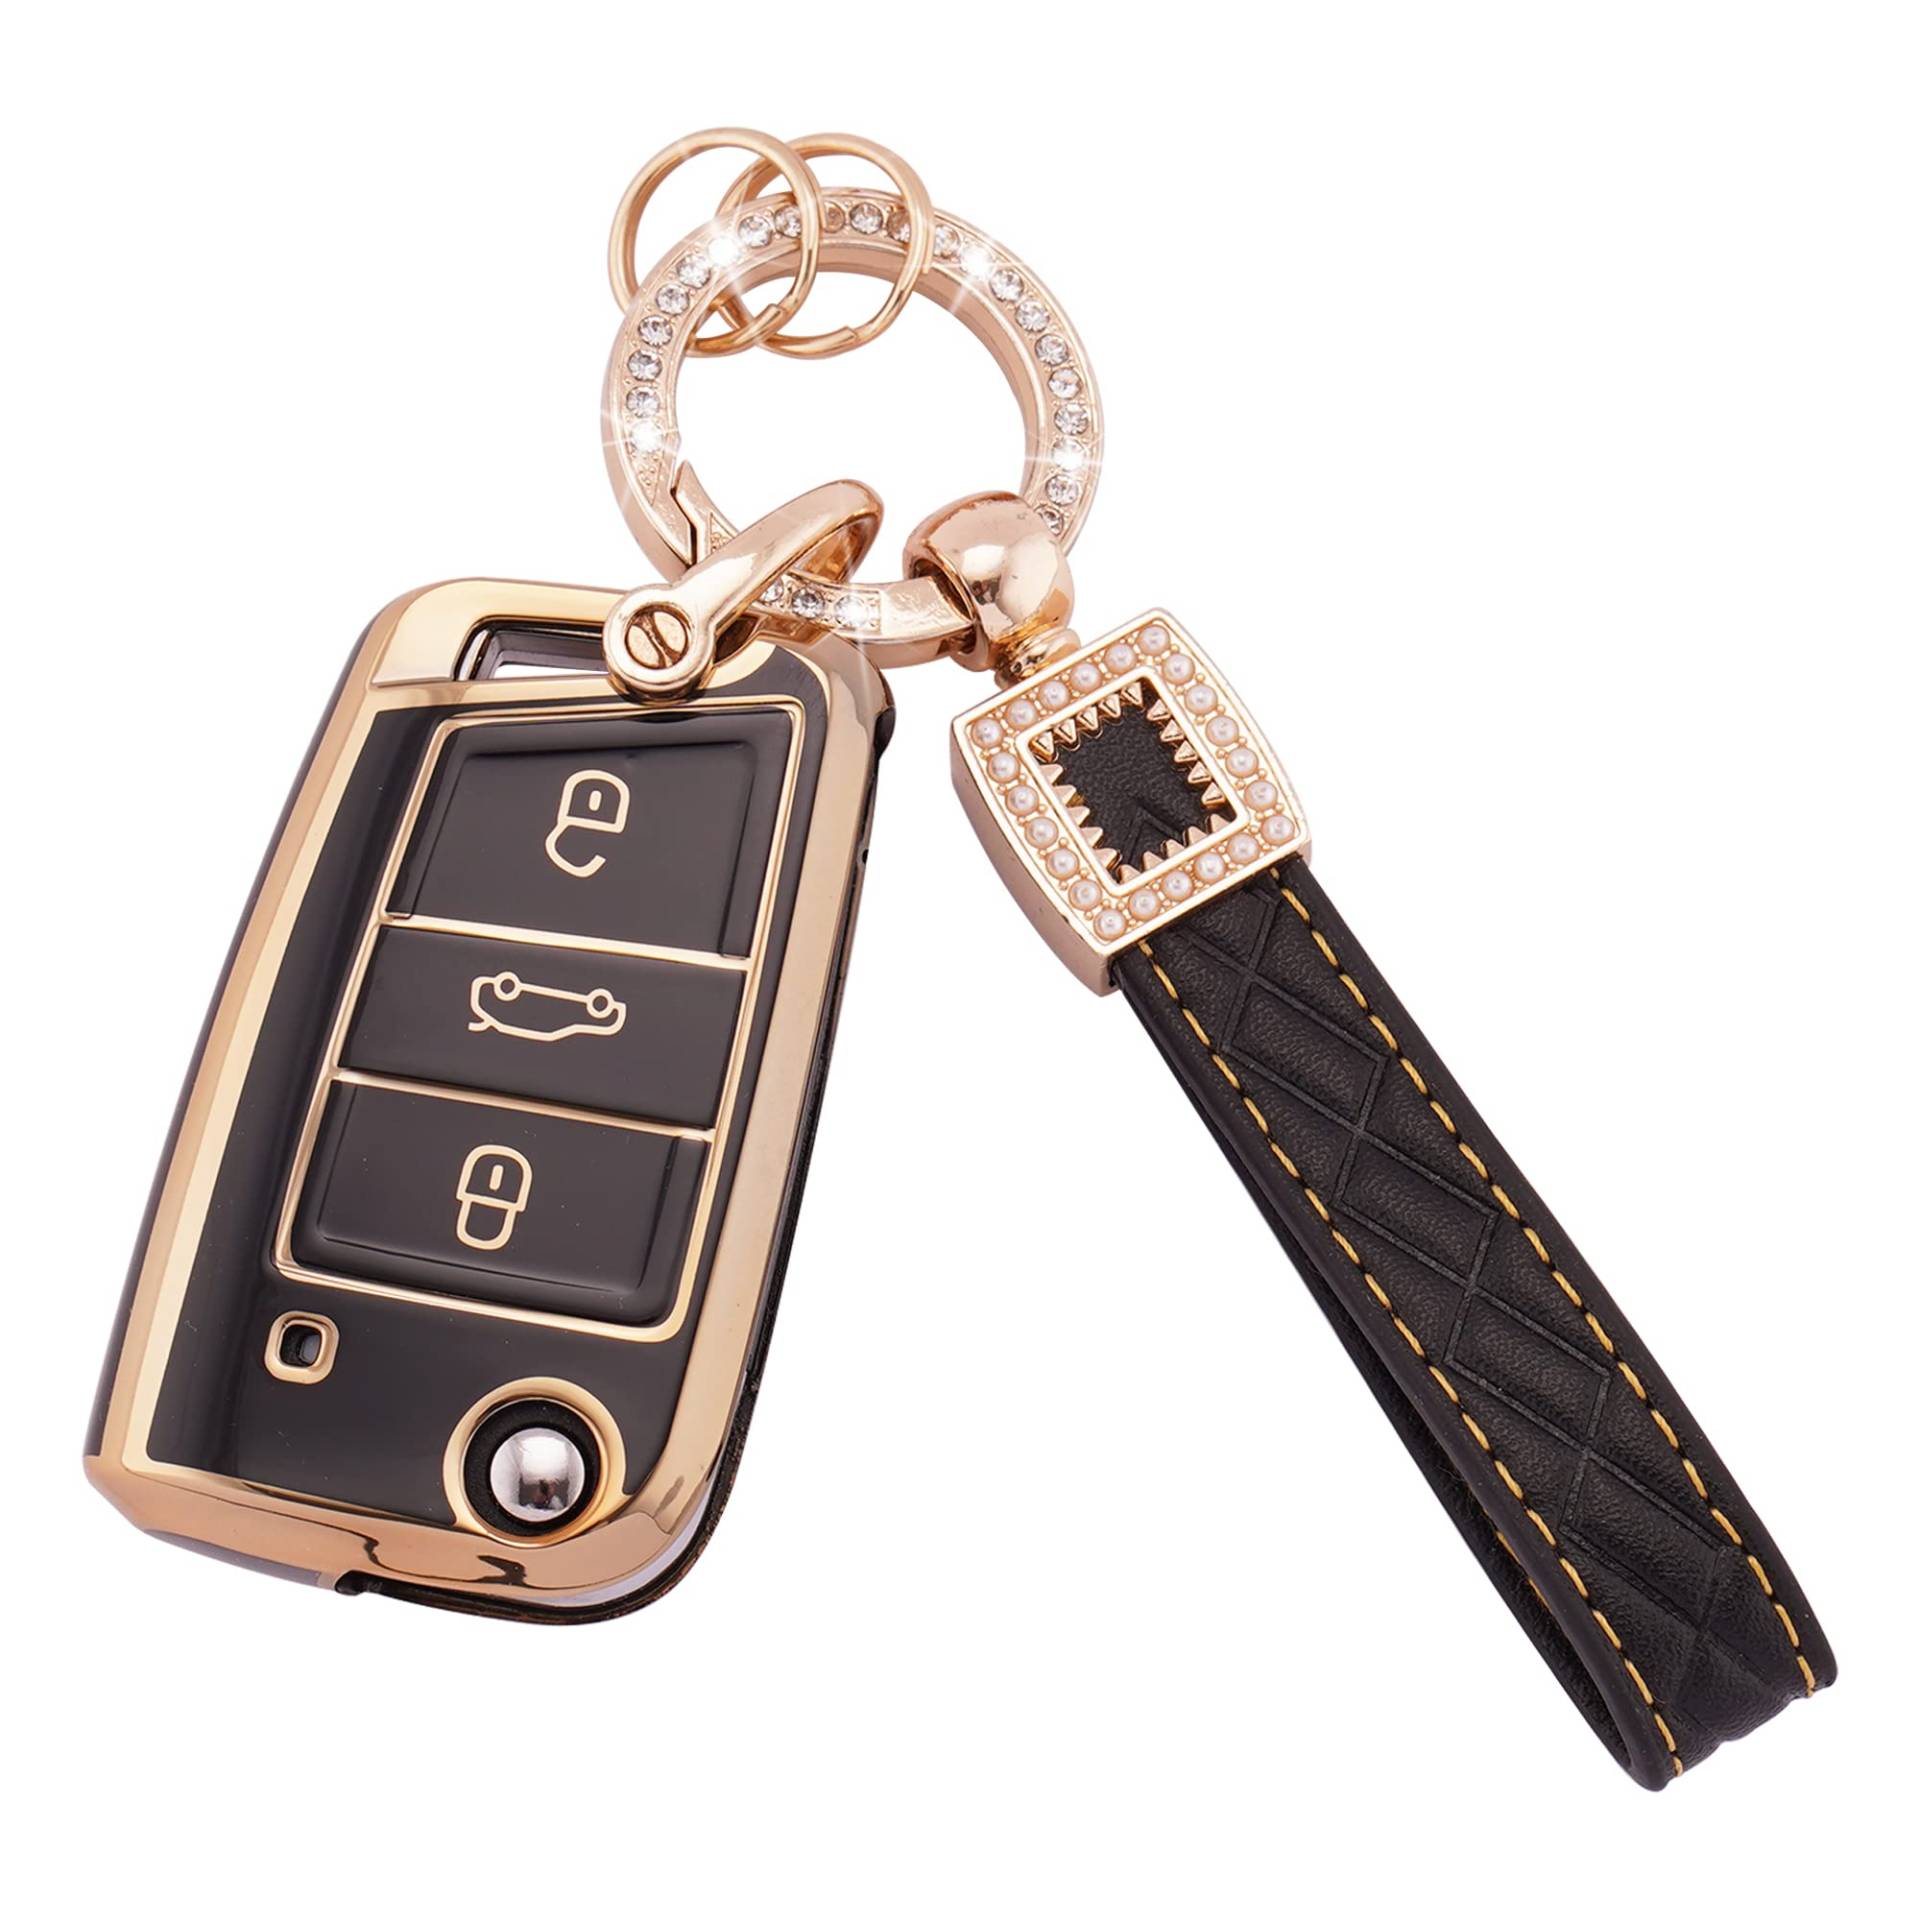 Koaudb Autoschlüssel Hülle Cover Passt für VW Golf 7 Polo MK6 Jetta Tiguan Skoda Superb Seat Leon, 3 Tasten Schlüsseletui TPU Schlüsselhülle mit Lederanhänger Schlüsselanhänger (BP-Vlw-3B) von Koaudb